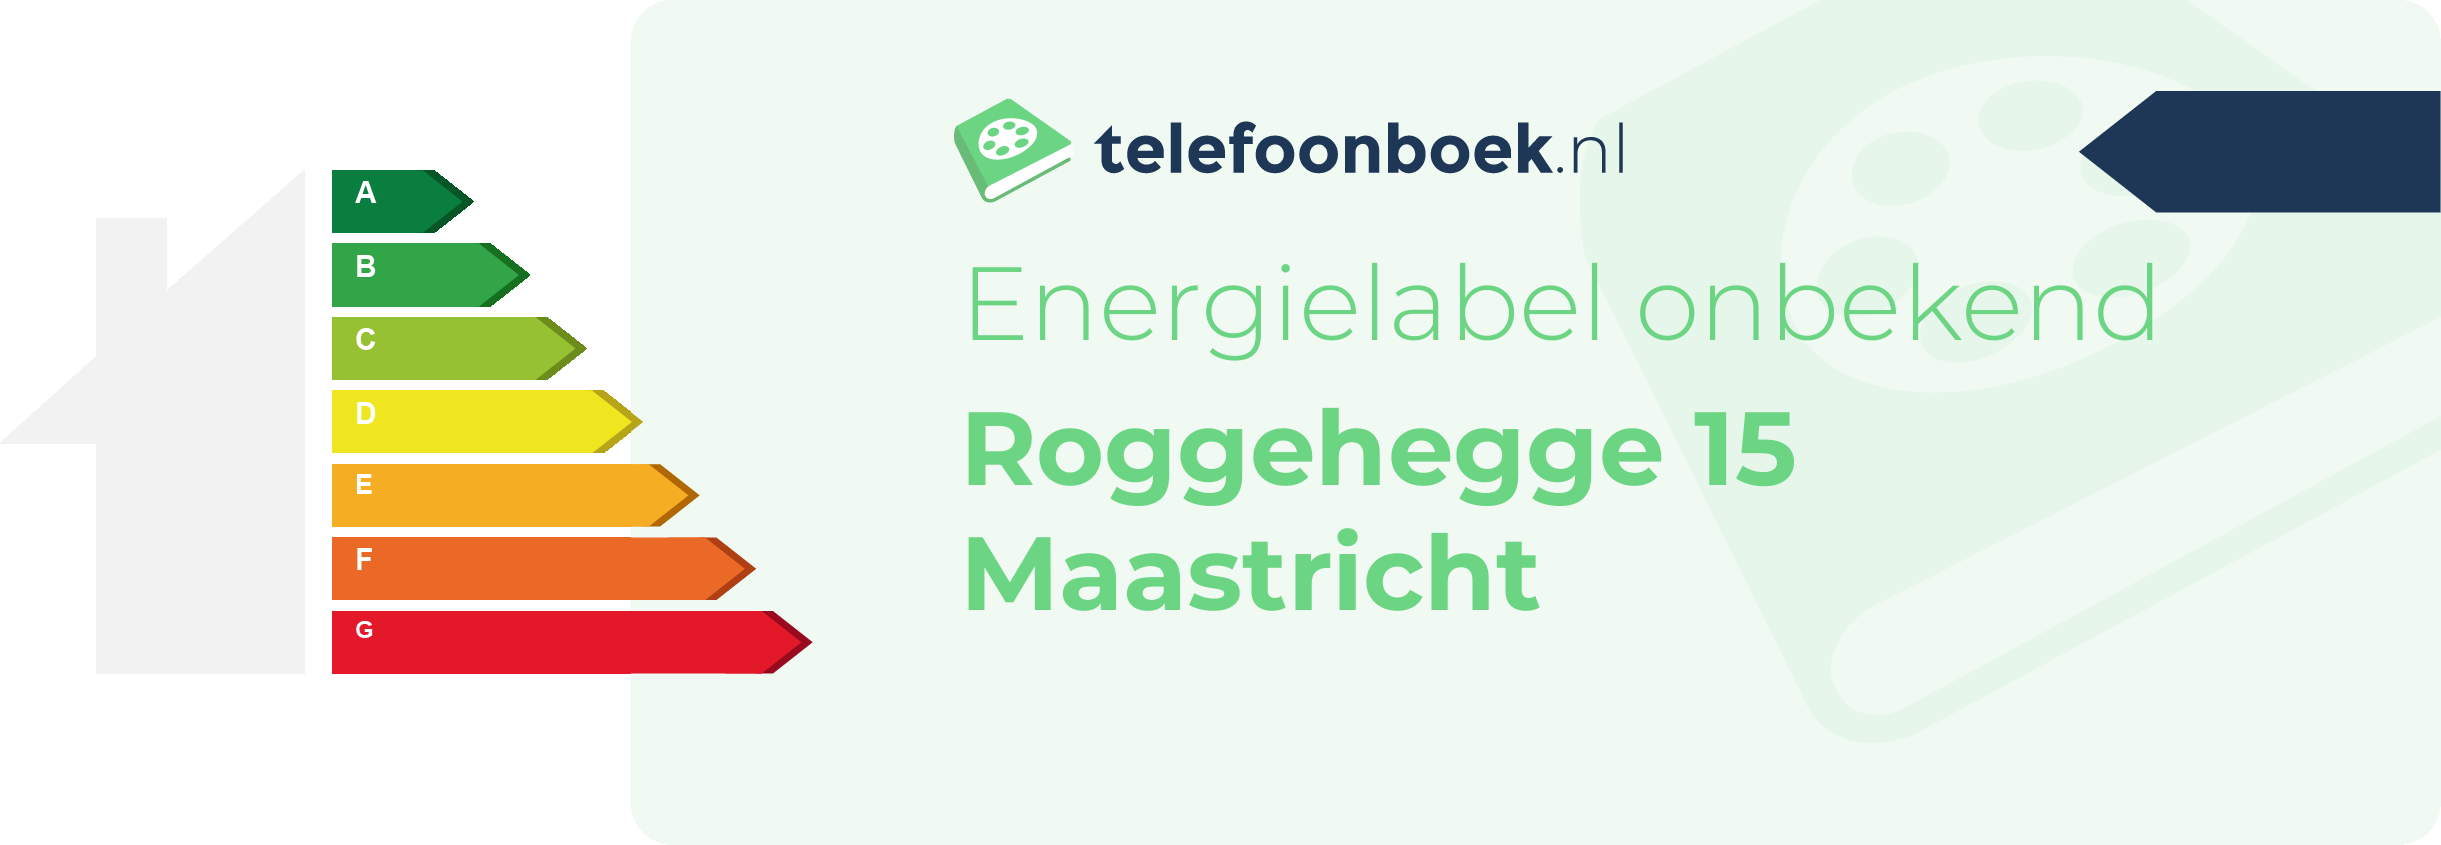 Energielabel Roggehegge 15 Maastricht